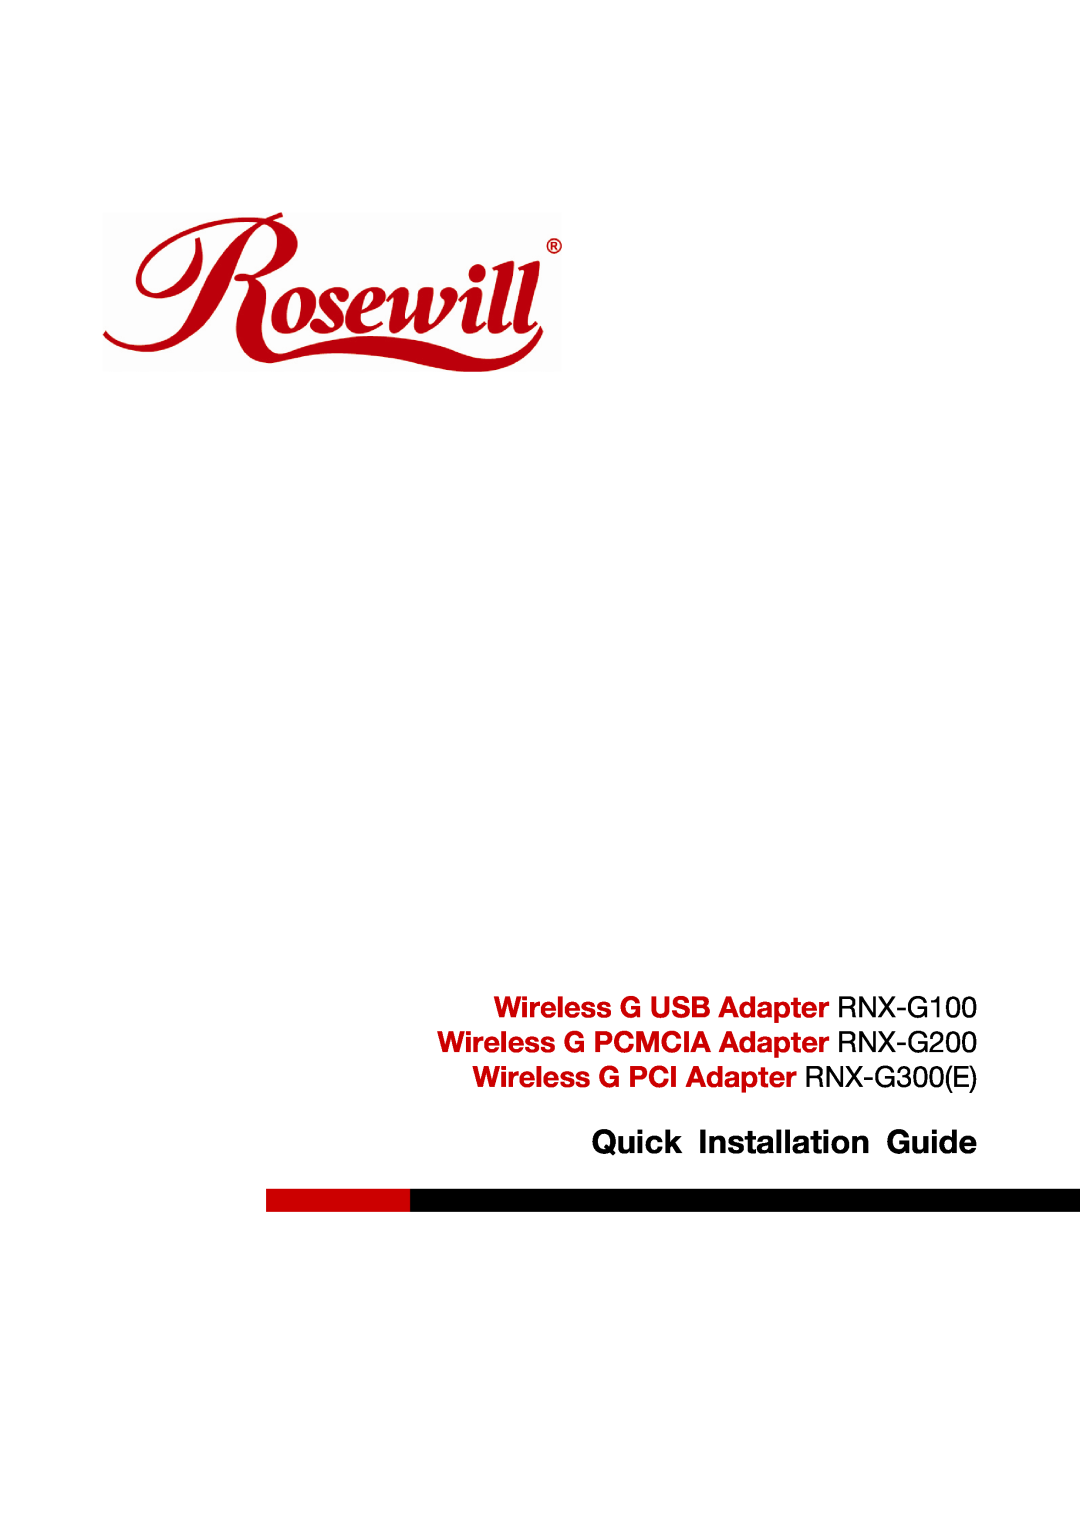 Rosewill manual Quick Installation Guide, Wireless G USB Adapter RNX-G100 Wireless G PCMCIA Adapter RNX-G200 